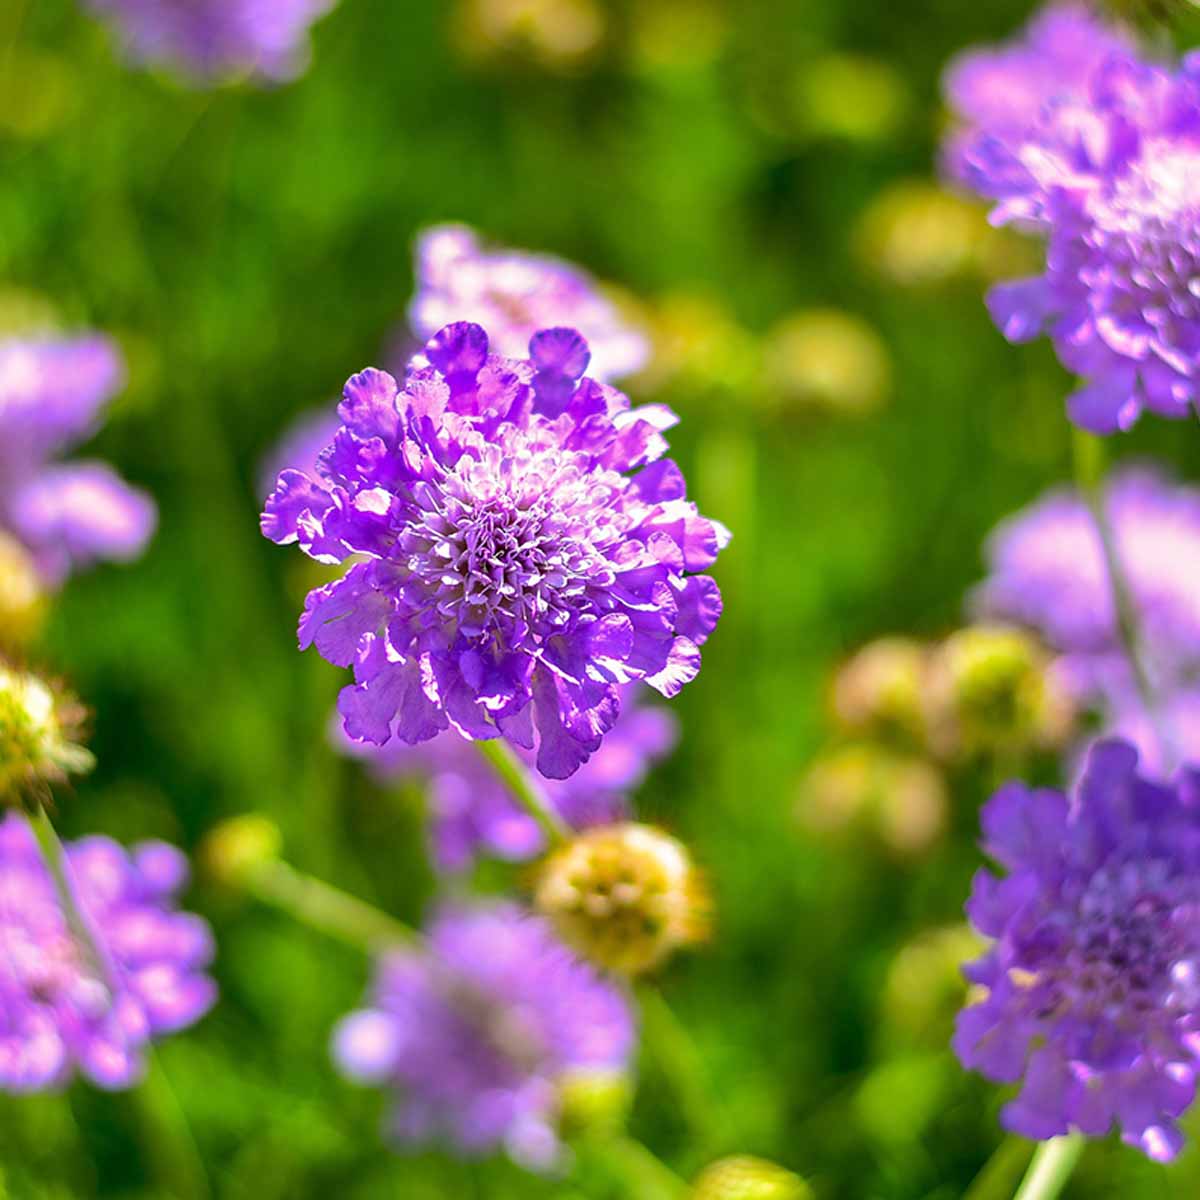 Purple petals with a lighter purple center.